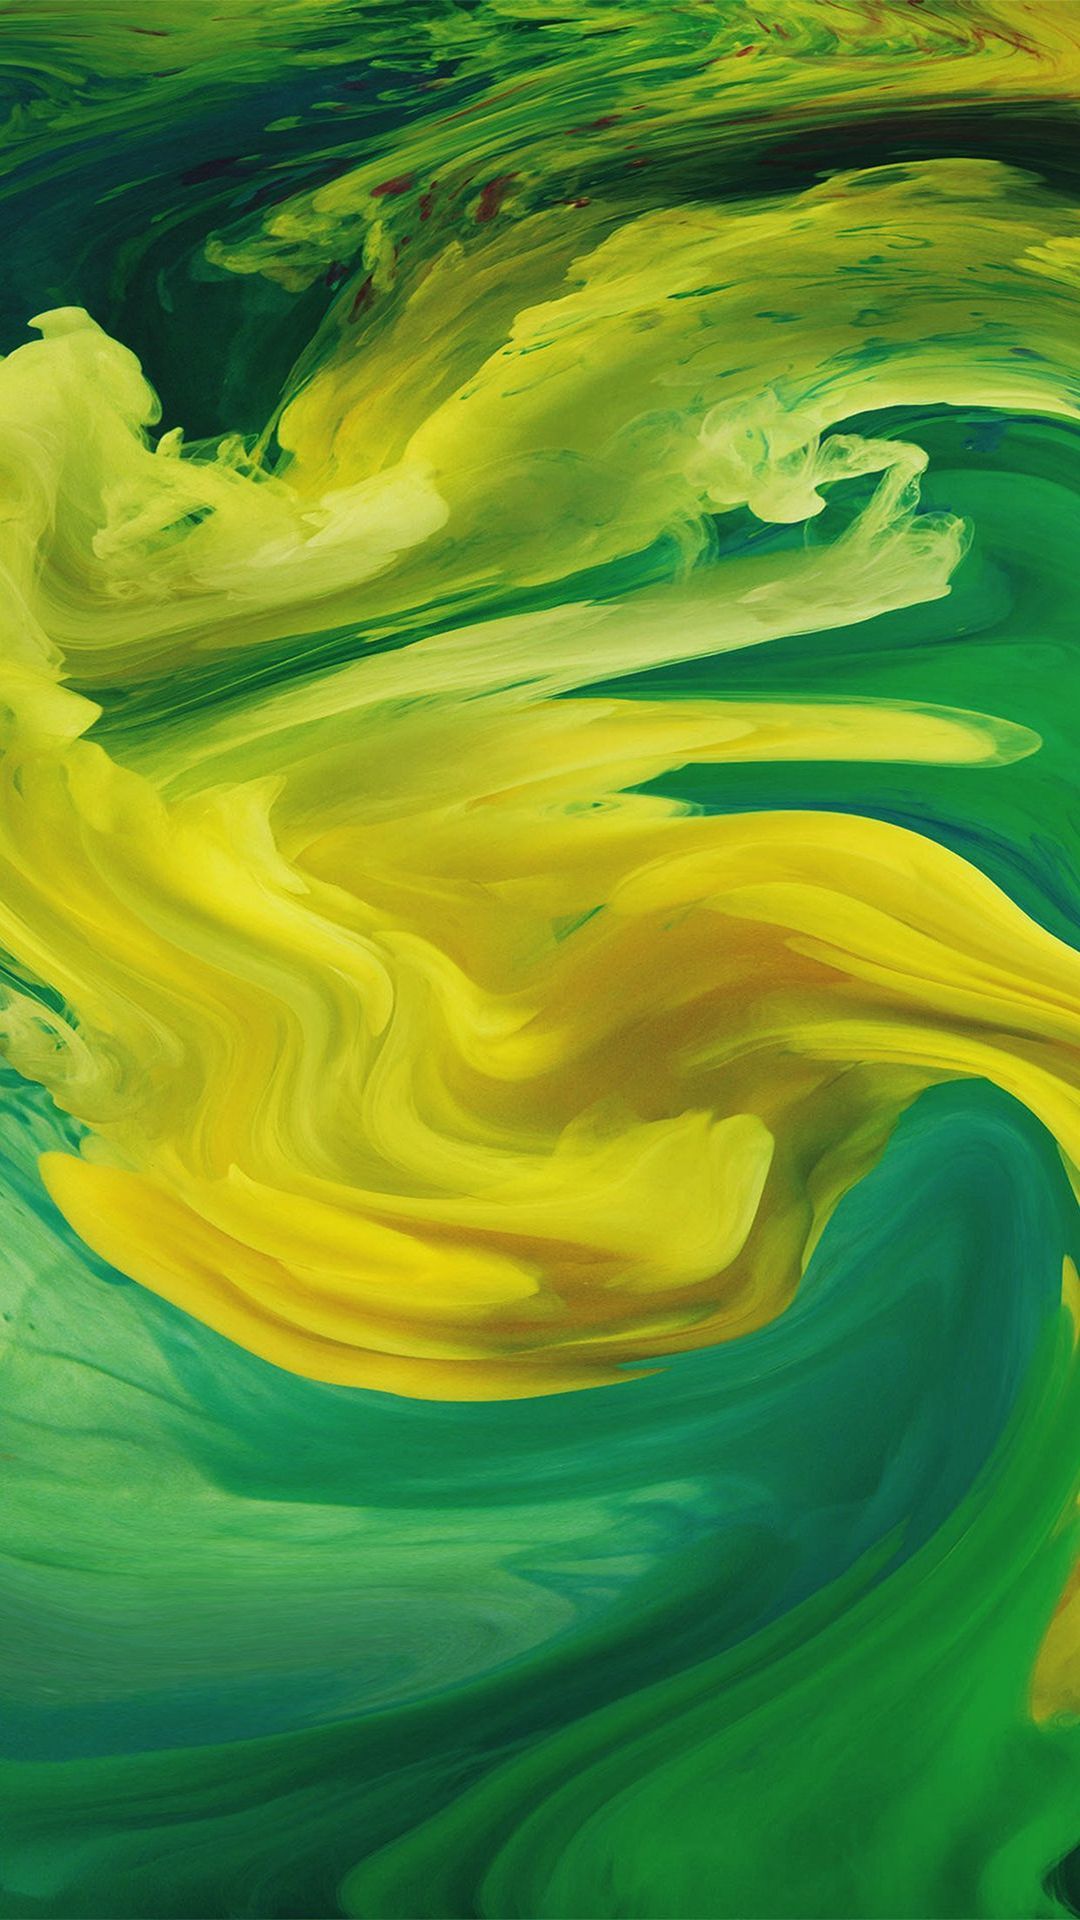 Hurricane Swirl Abstract Art Paint Green Pattern IPhone 6 Wallpaper Download. IPhone Wallpaper, IPad Wallpaper One Stop Download. 그림, 배경, 유화